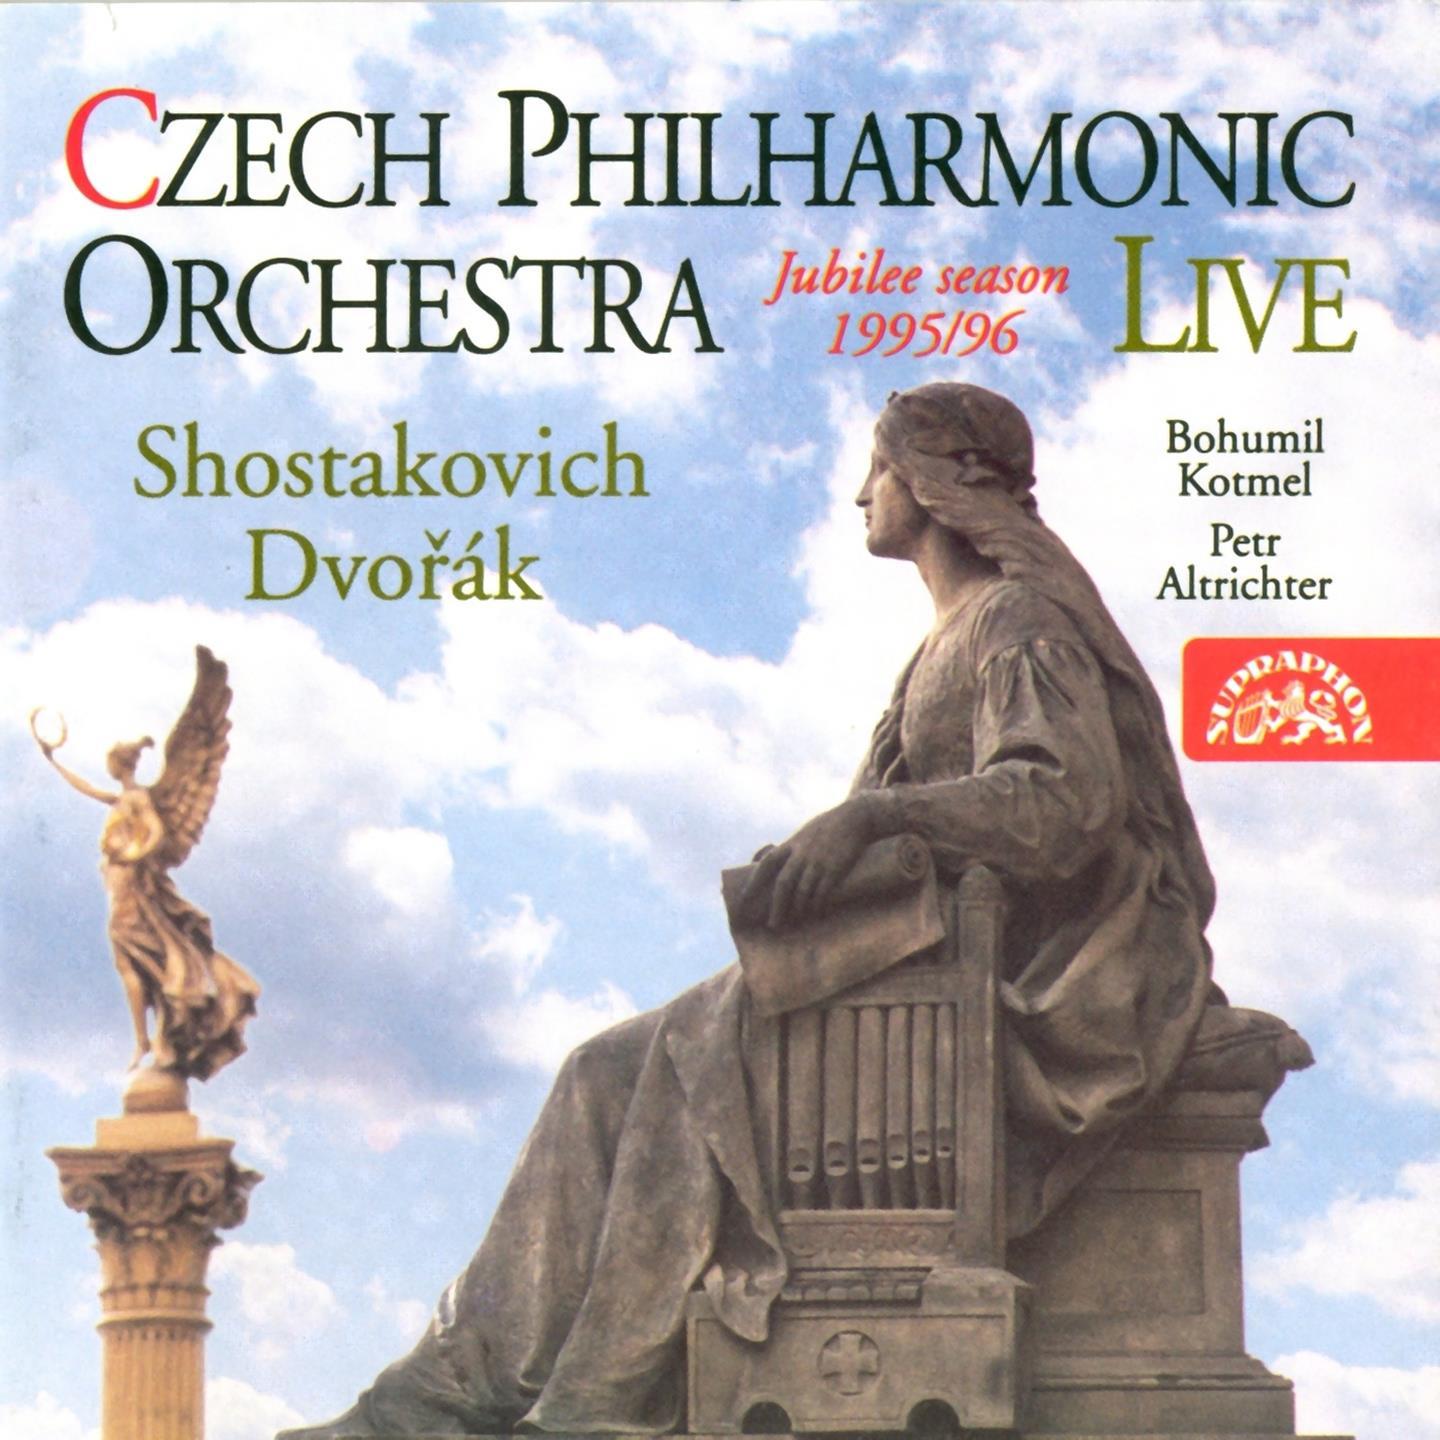 Shostakovich: Violin Concerto  Dvoa k: Suite in A major